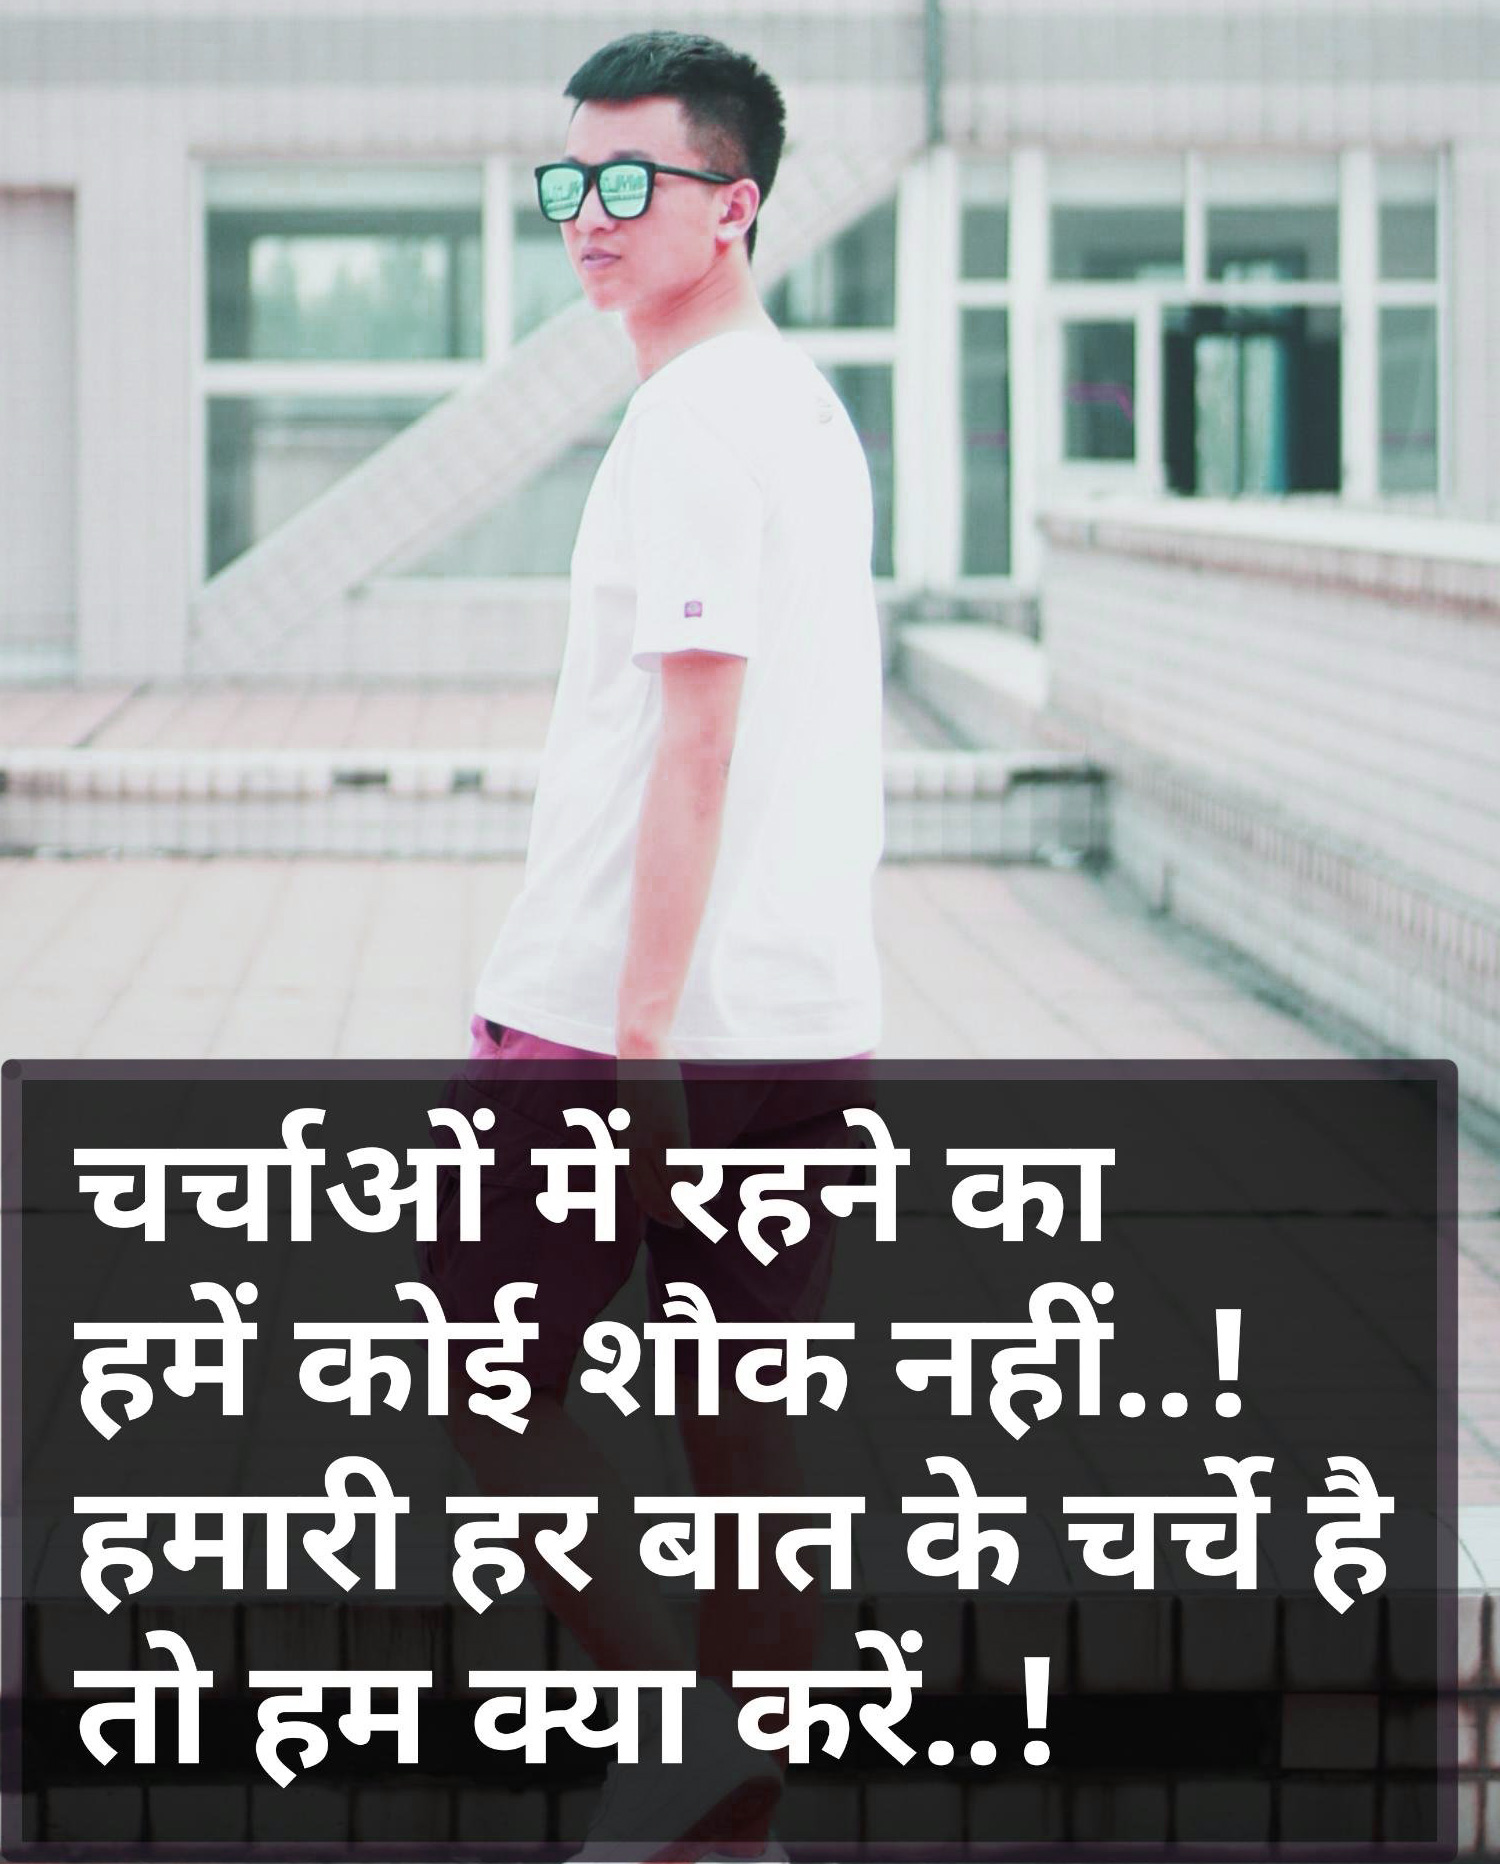 Hindi Attitude Whatsapp DP Profile Images Download 54